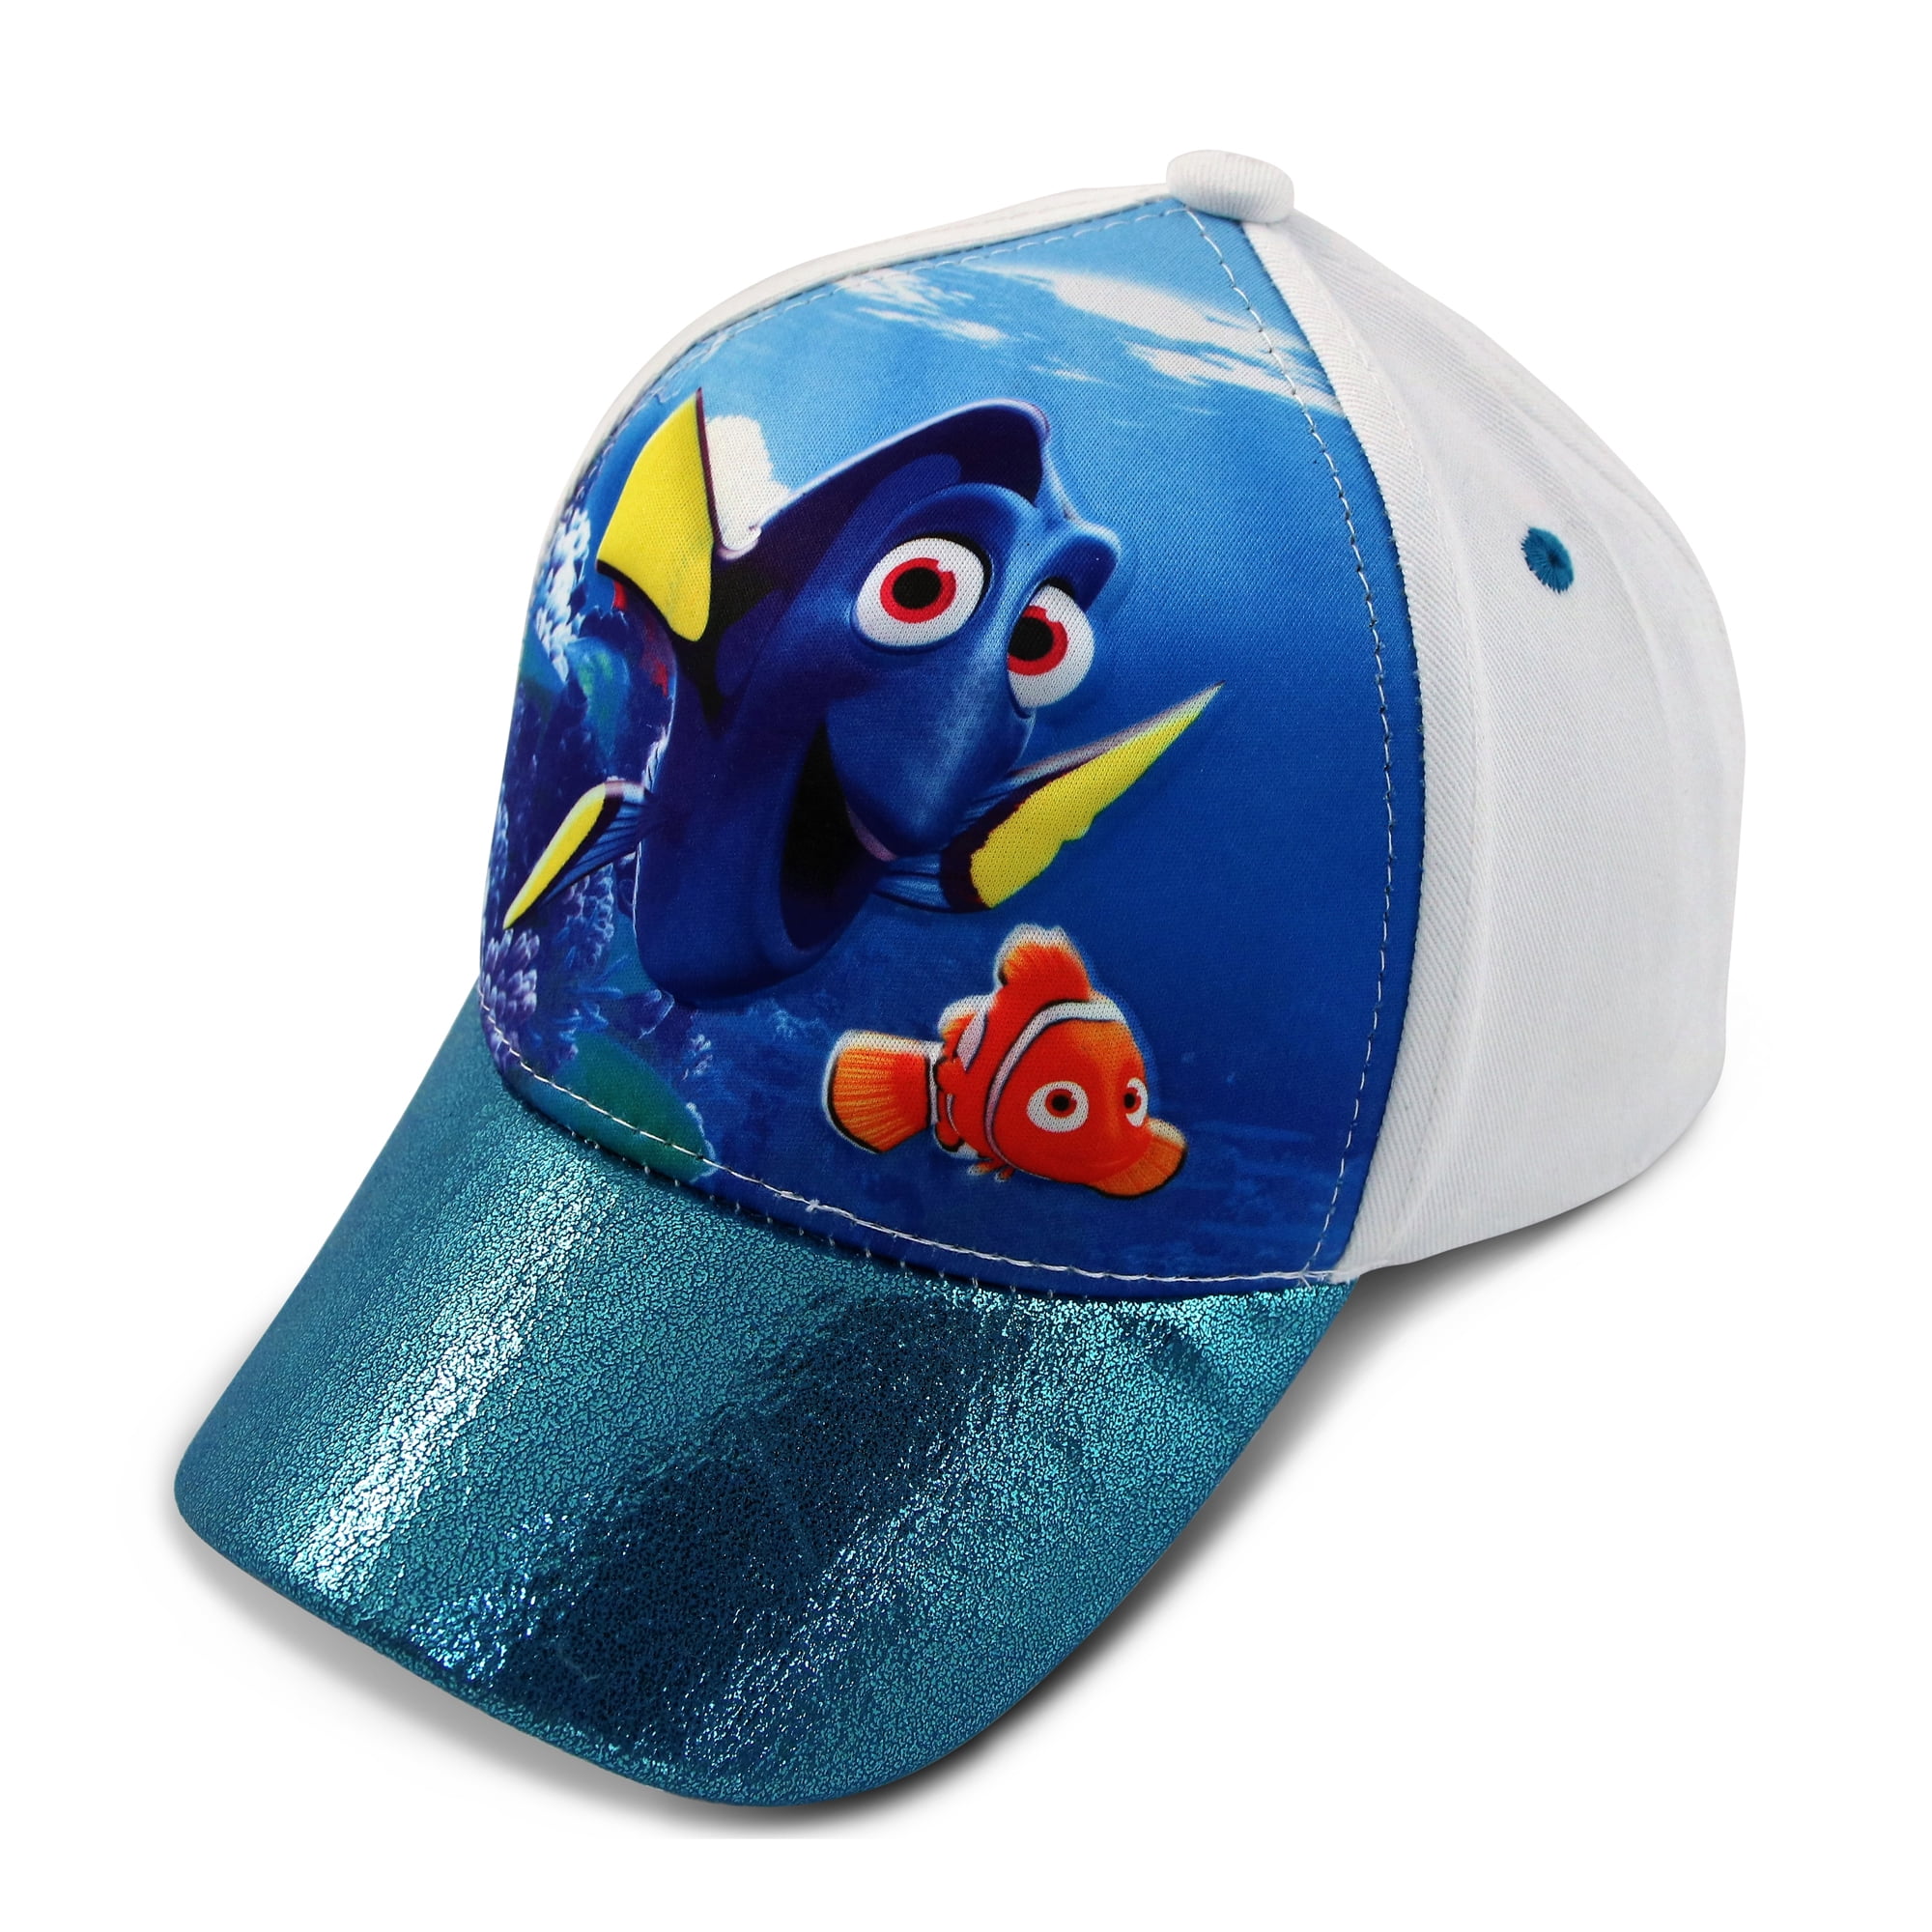 2013 Disney pixar Finding Dory Baseball Cap 